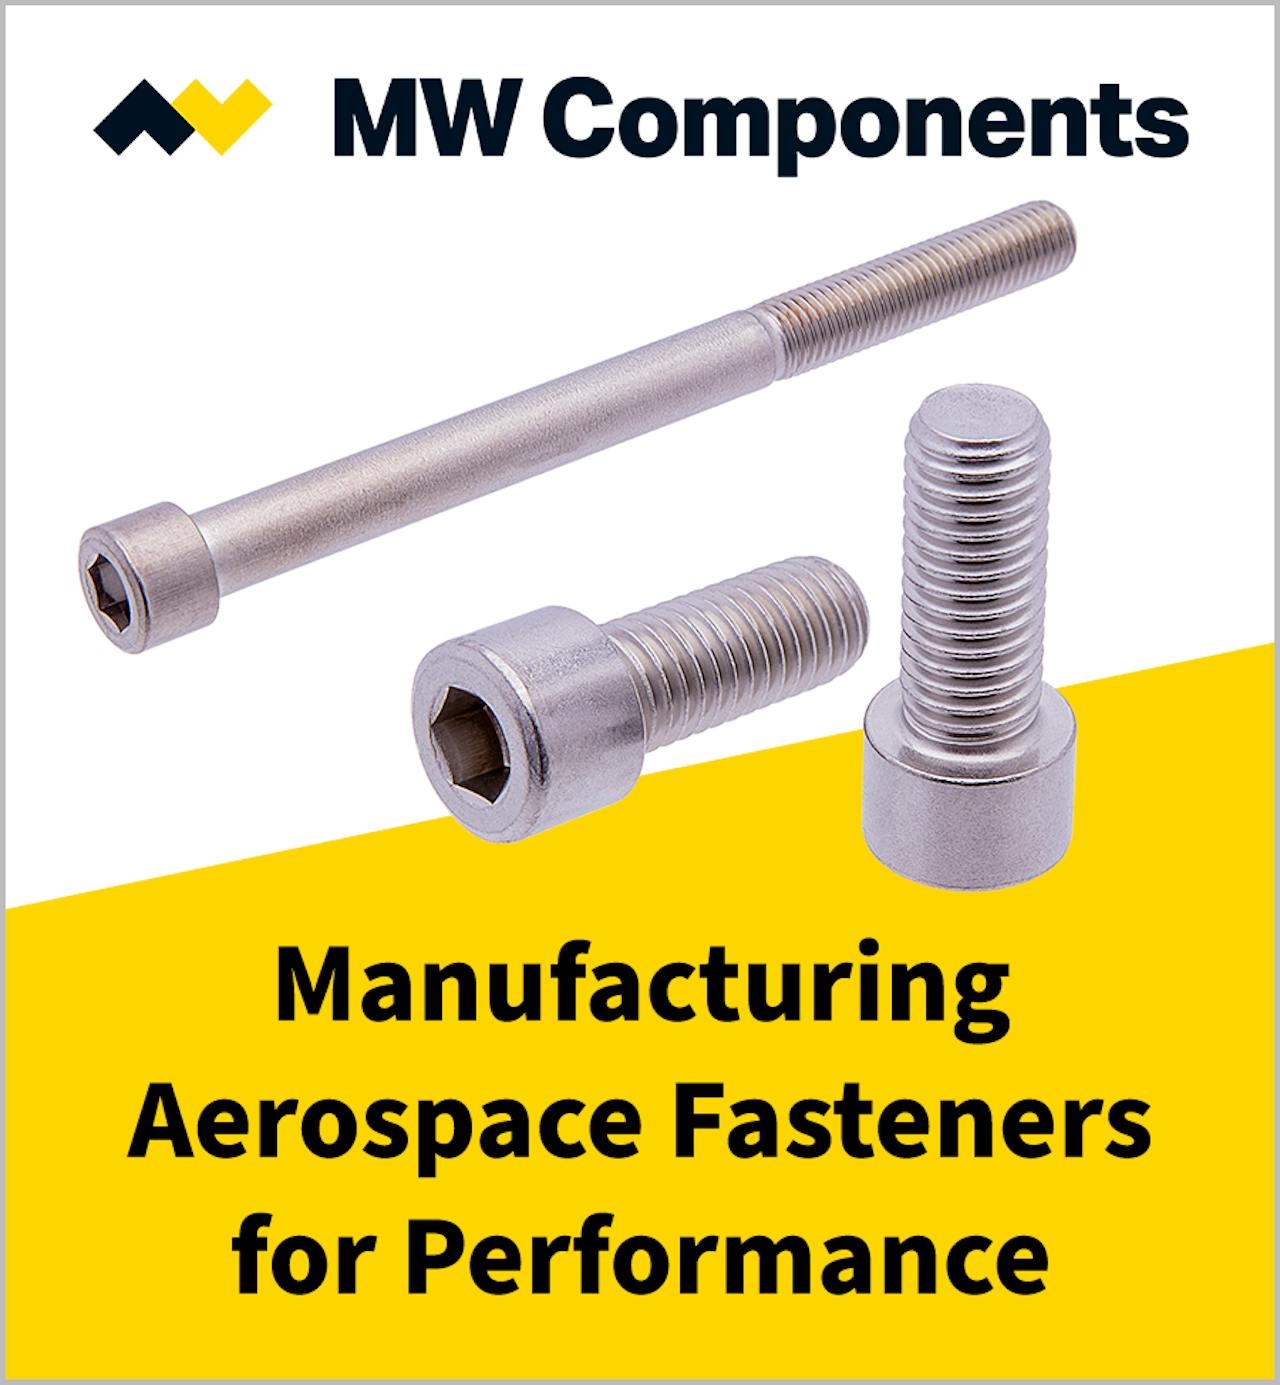 webinar thumbnail - Manufacturing Aerospace Fasteners for Performance